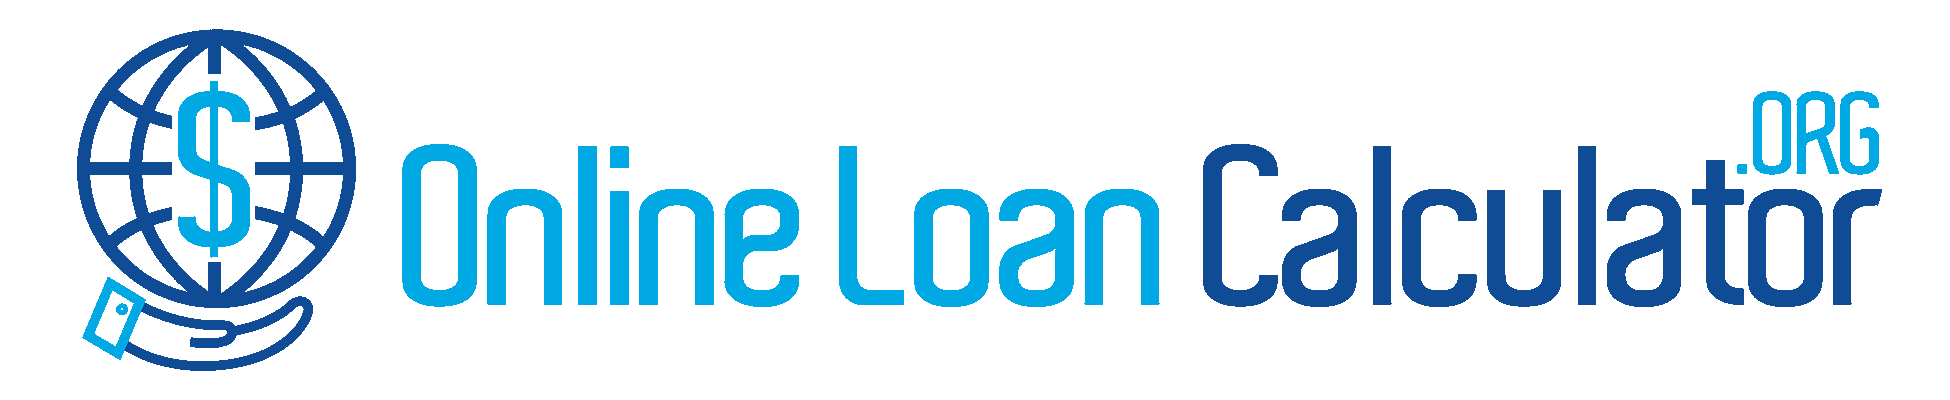 Online Loan Calculator Logo